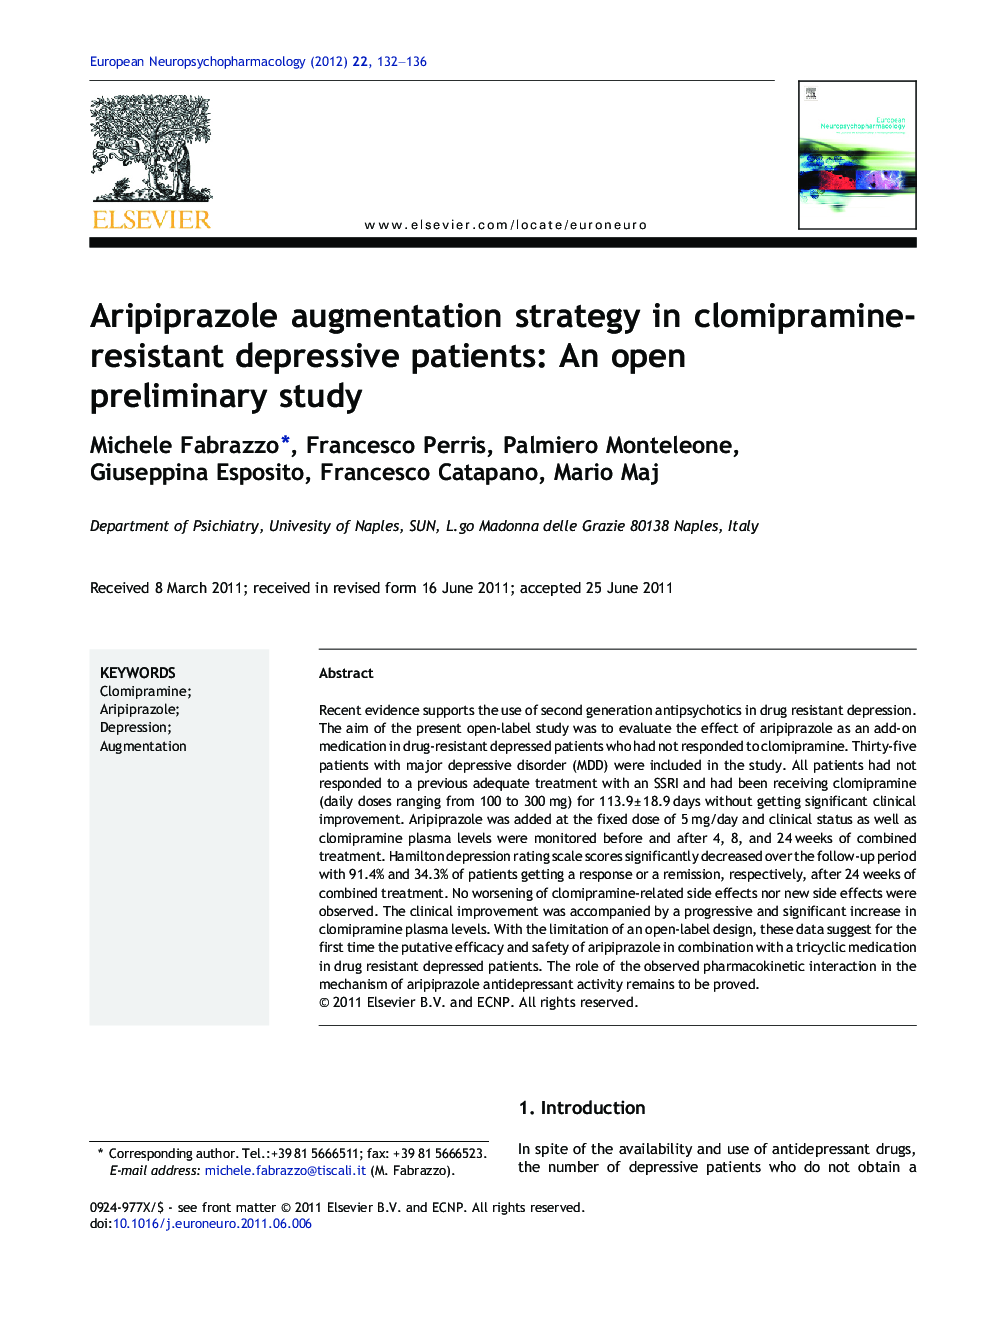 Aripiprazole augmentation strategy in clomipramine-resistant depressive patients: An open preliminary study